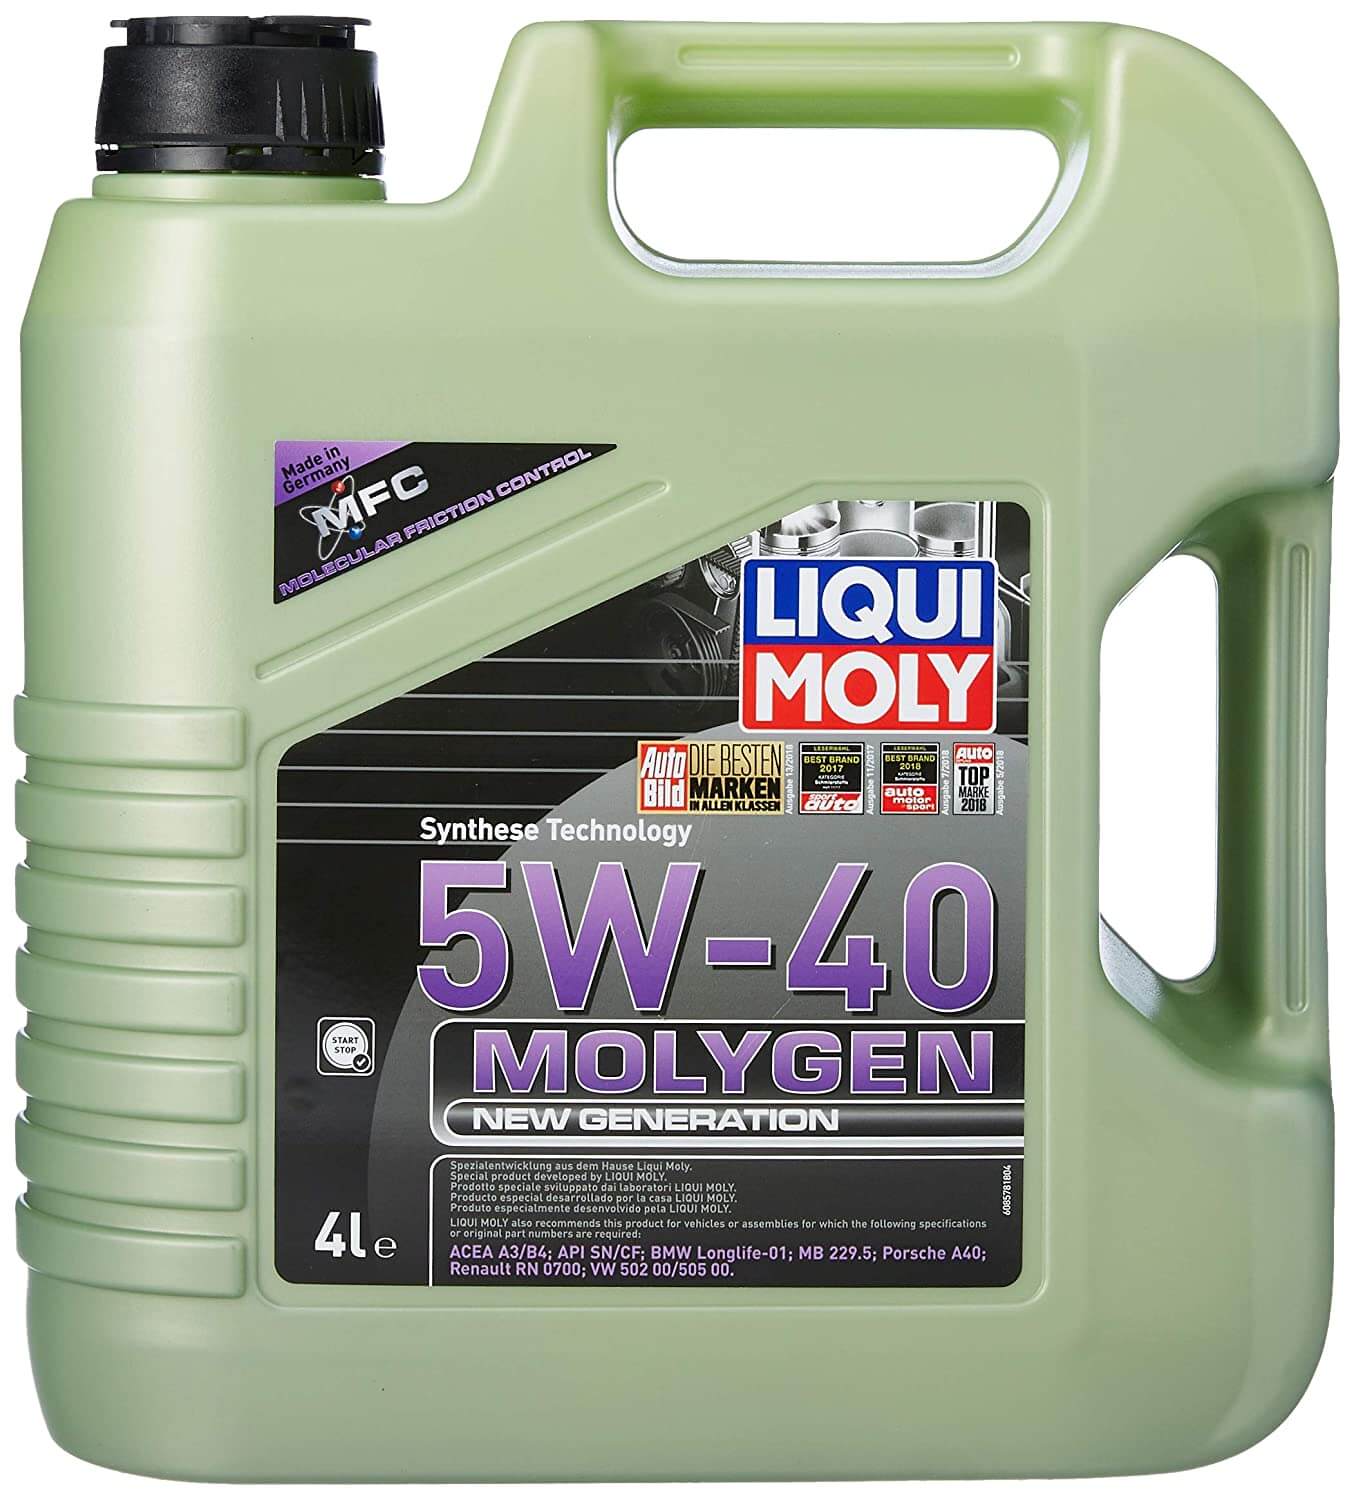 Liqui Moly Molygen New Generation 5W-40 Fully Synthetic Engine Oil